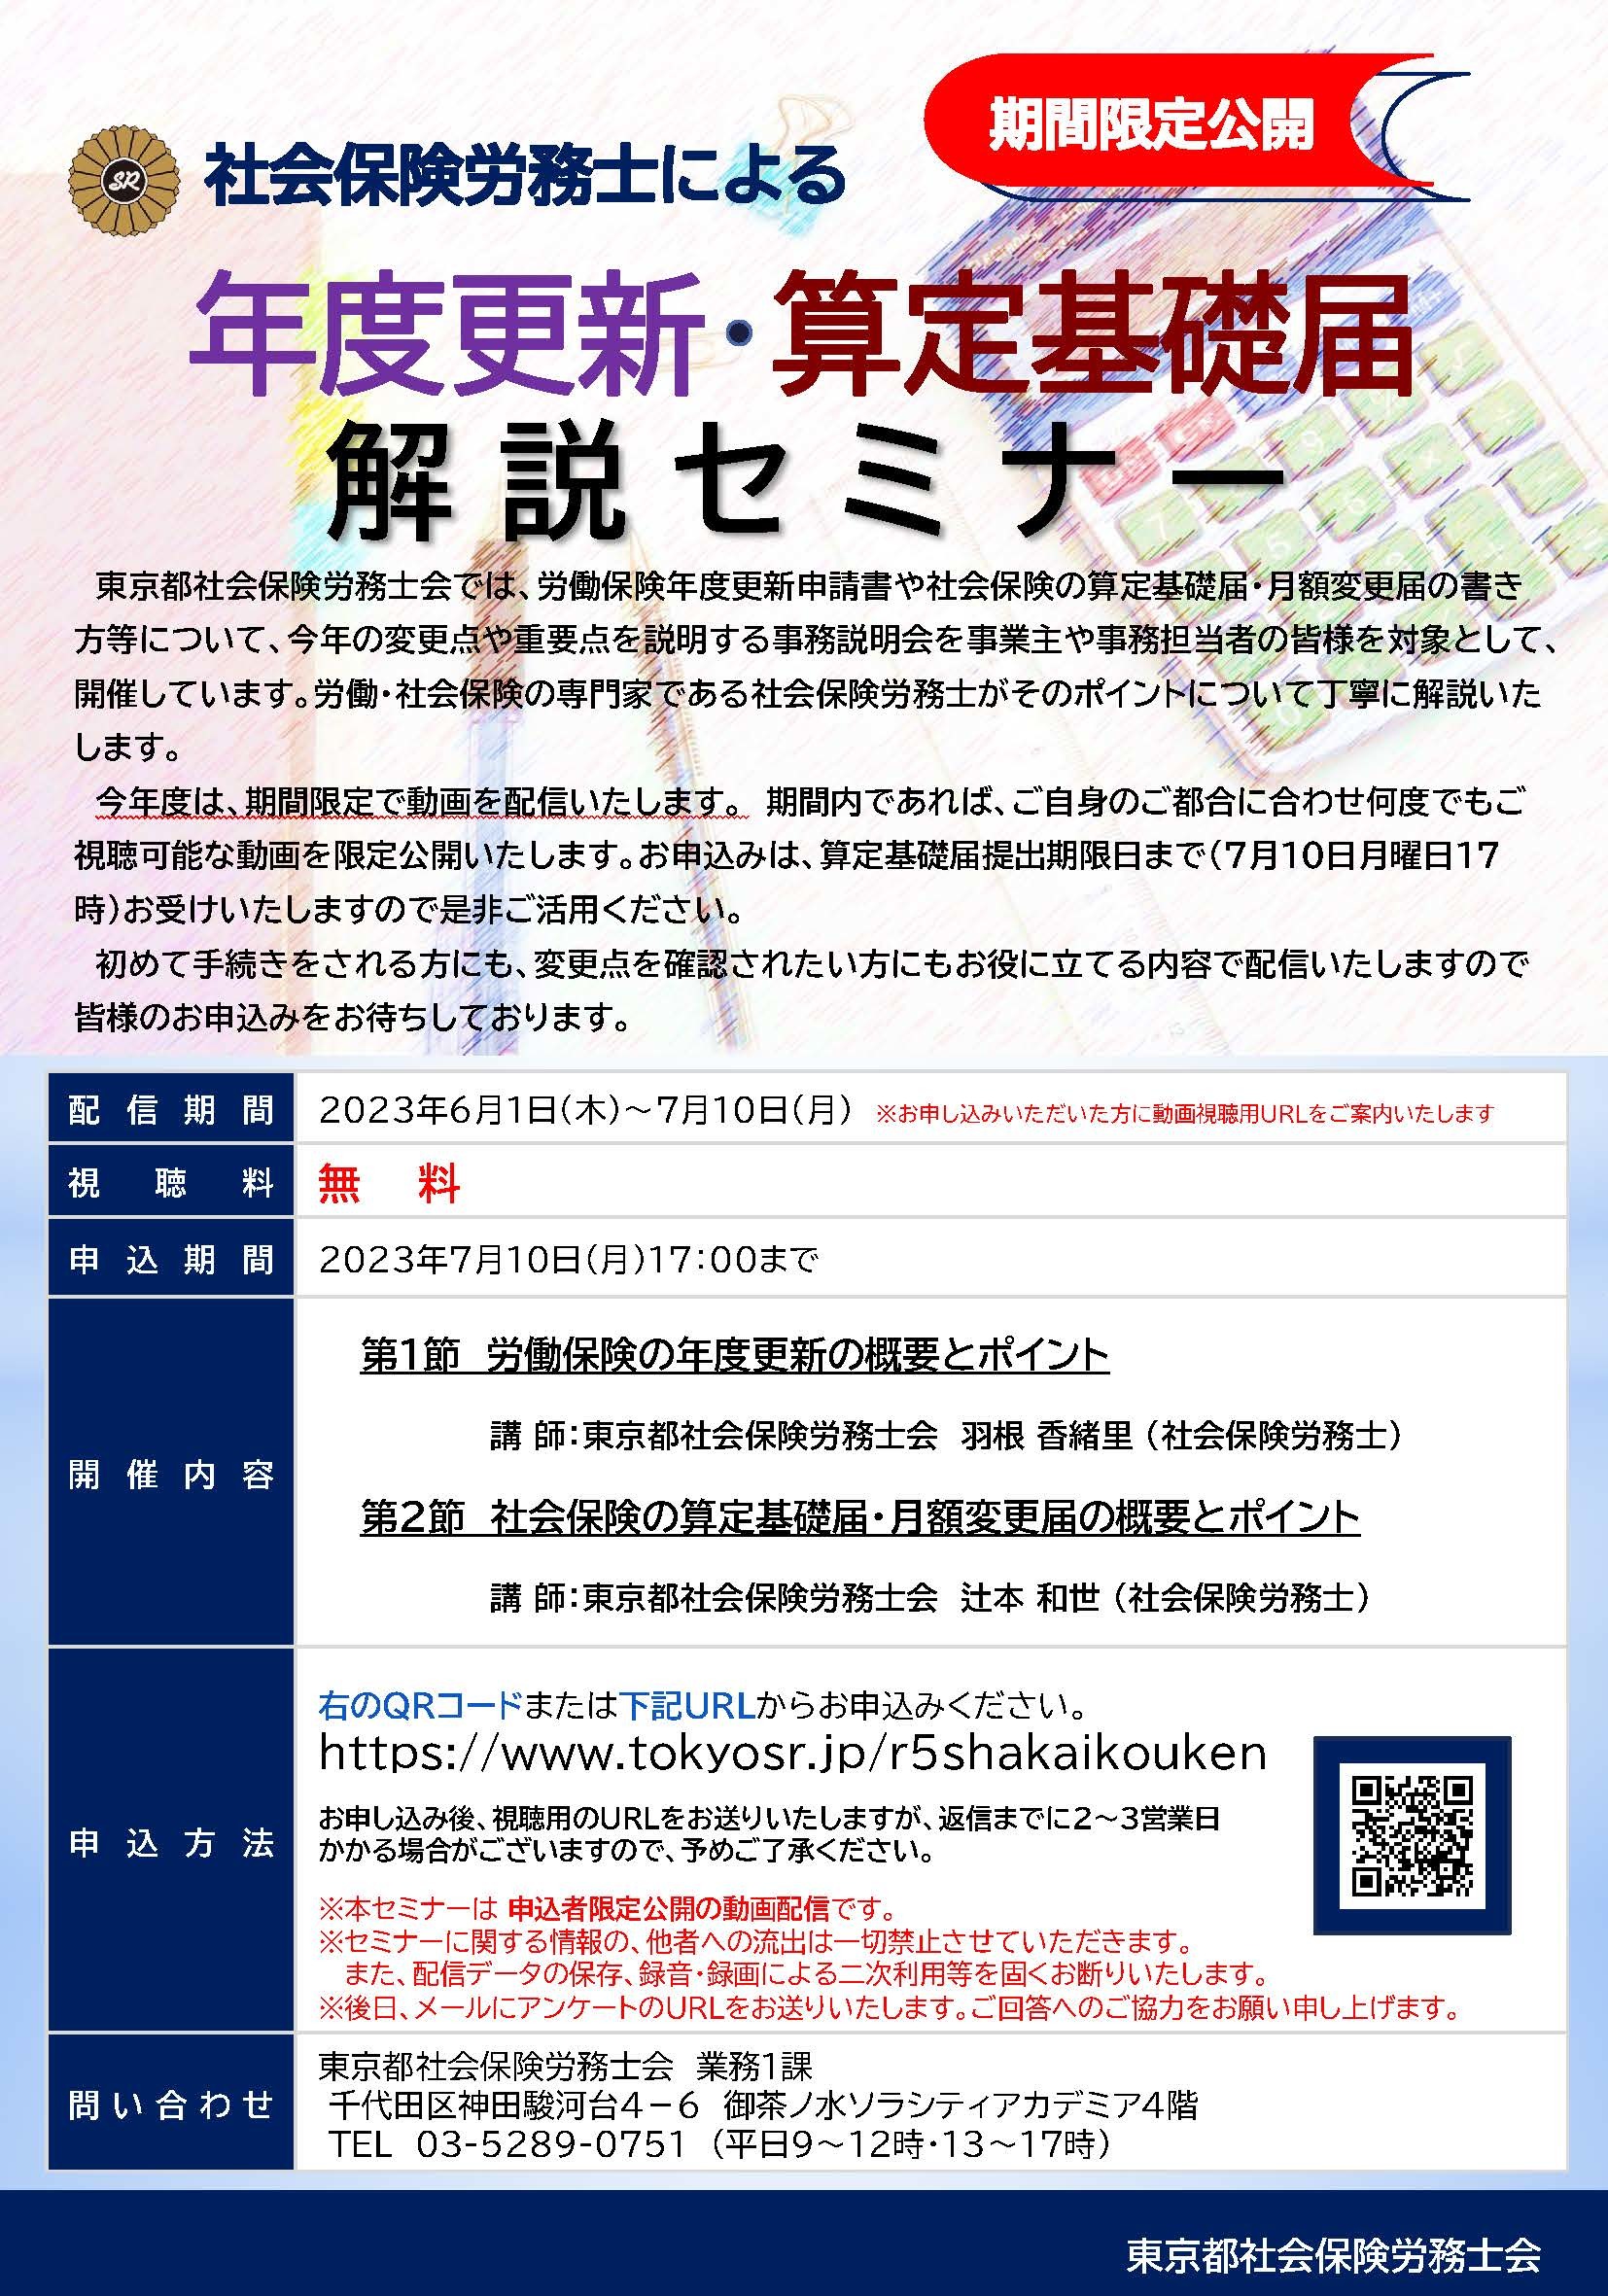 FX新刊「トレンドラインゾーン分析〜天から底まで根こそぎ狙う〜」 5/15発売